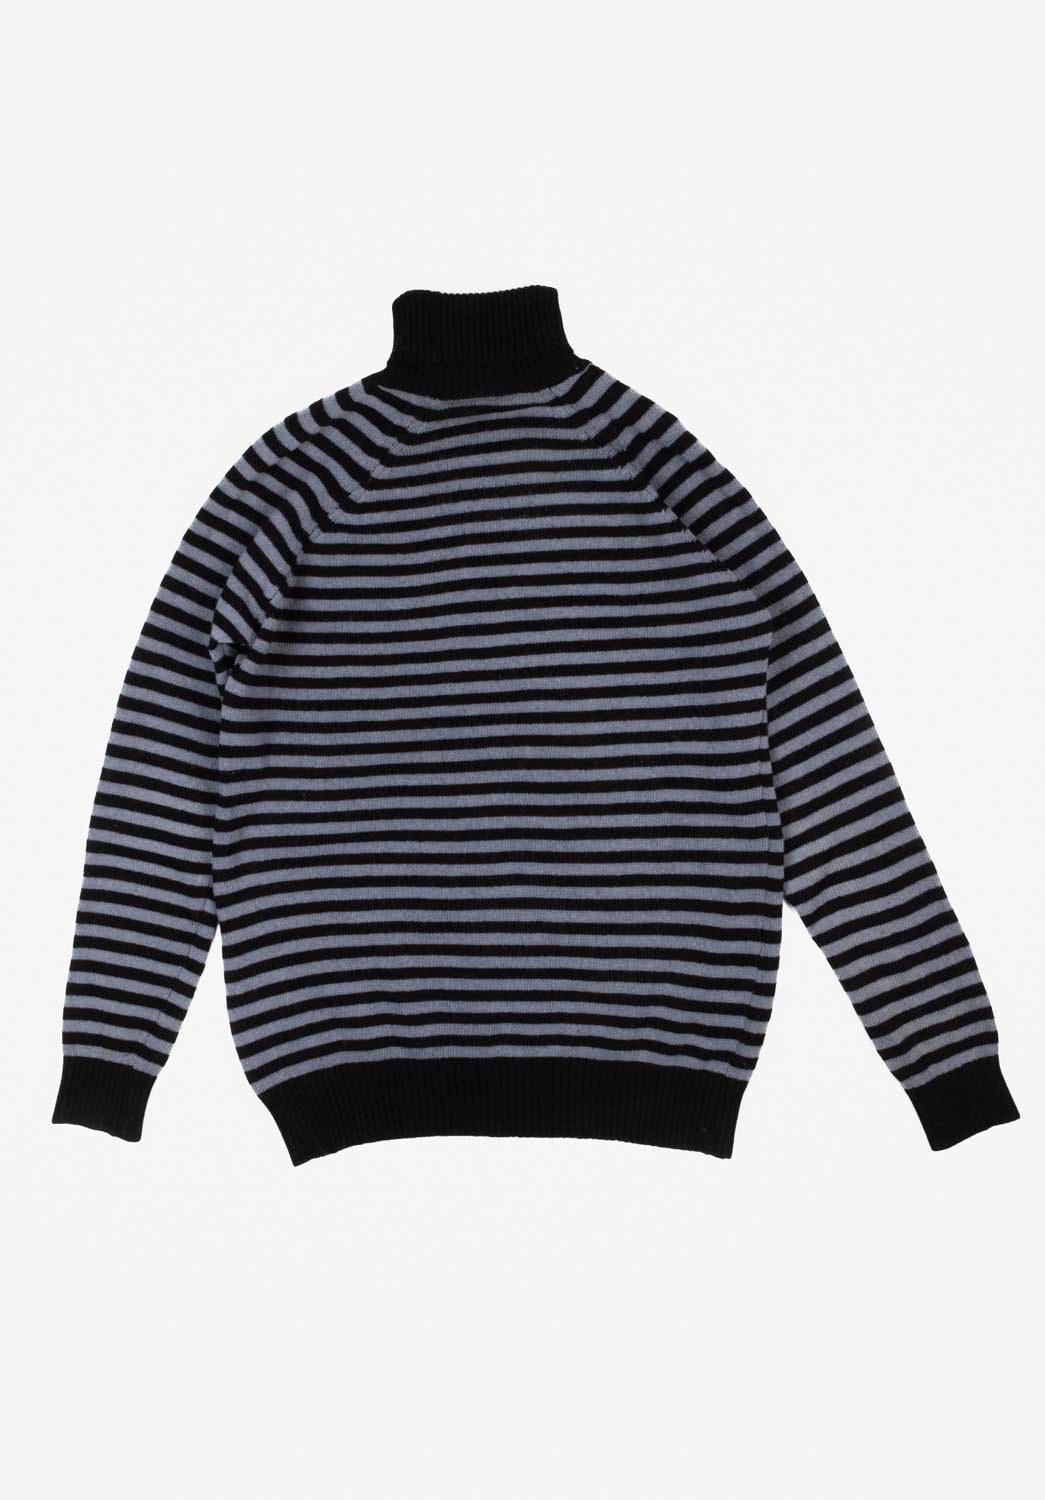 Dries Van Noten Turtle Neck Men Striped Sweater Size XL, S579 For Sale 1